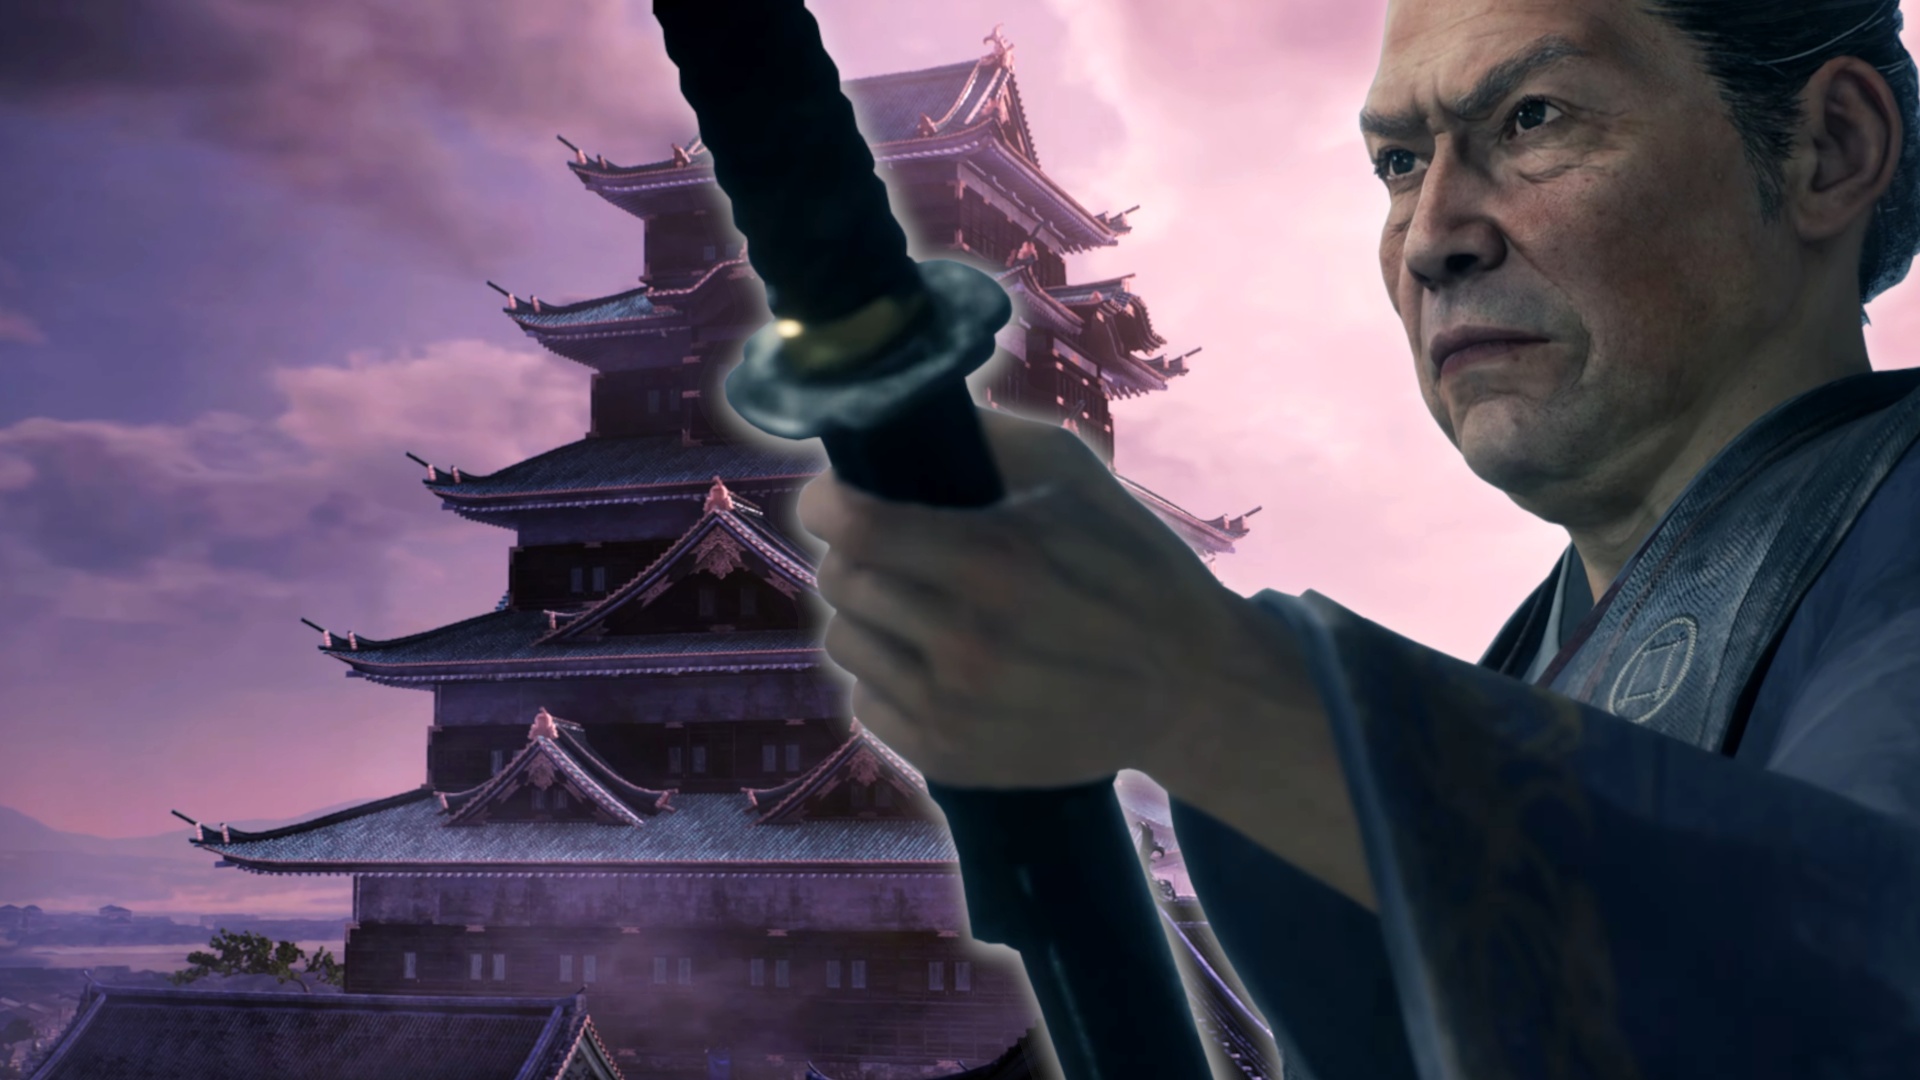 #Samurai-Action-RPG enthüllt: Rise of the Ronin zeigt erstmals seine Open World